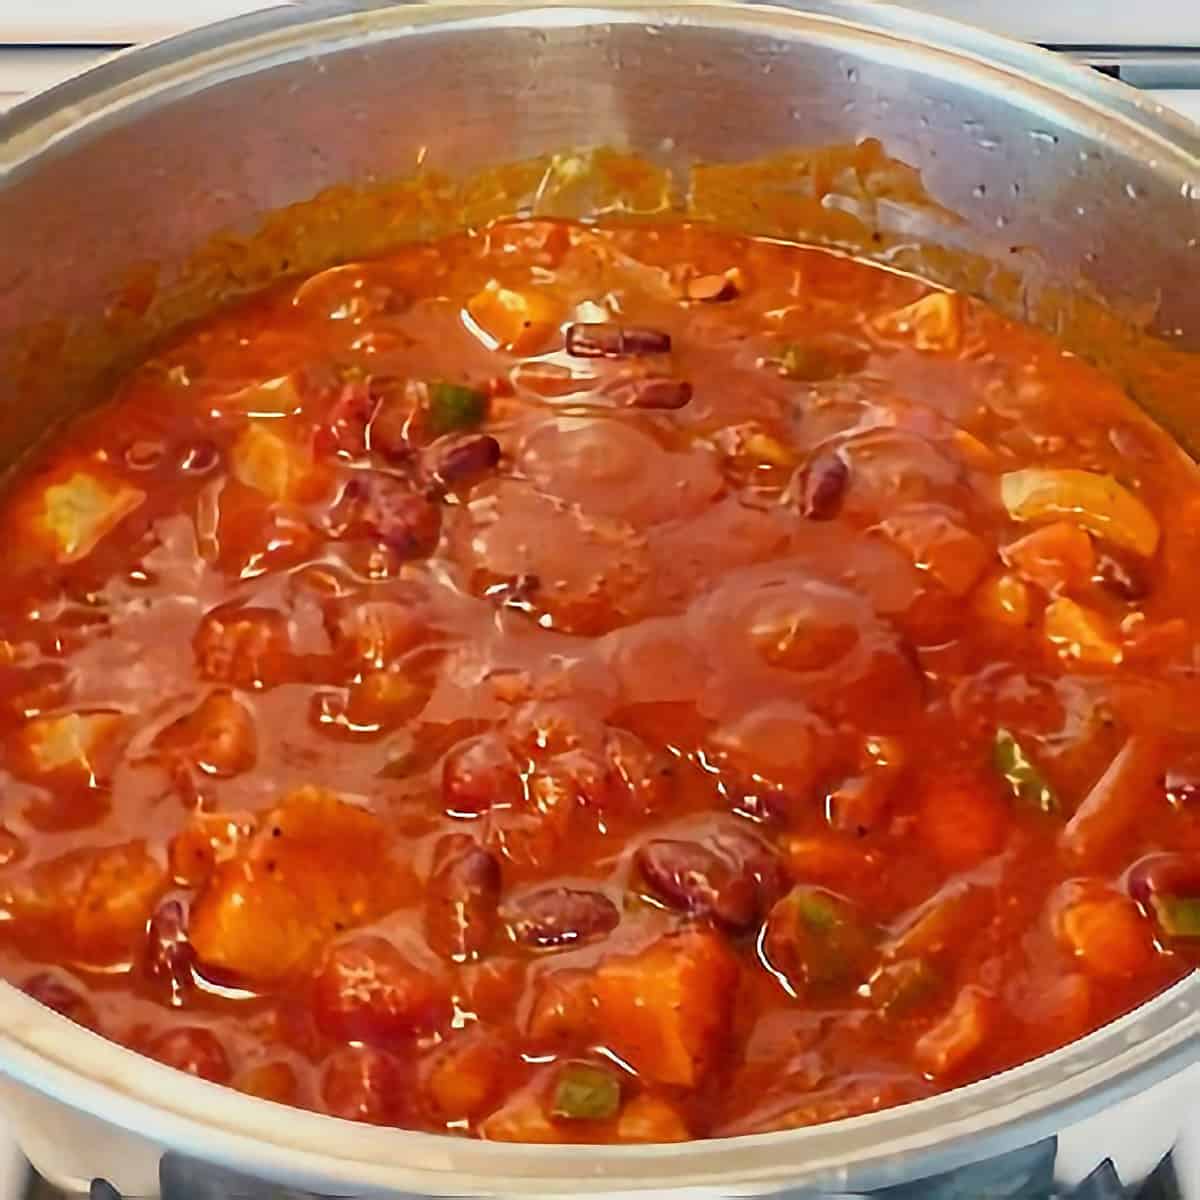 25 Best Chili Recipes - Fish Chili